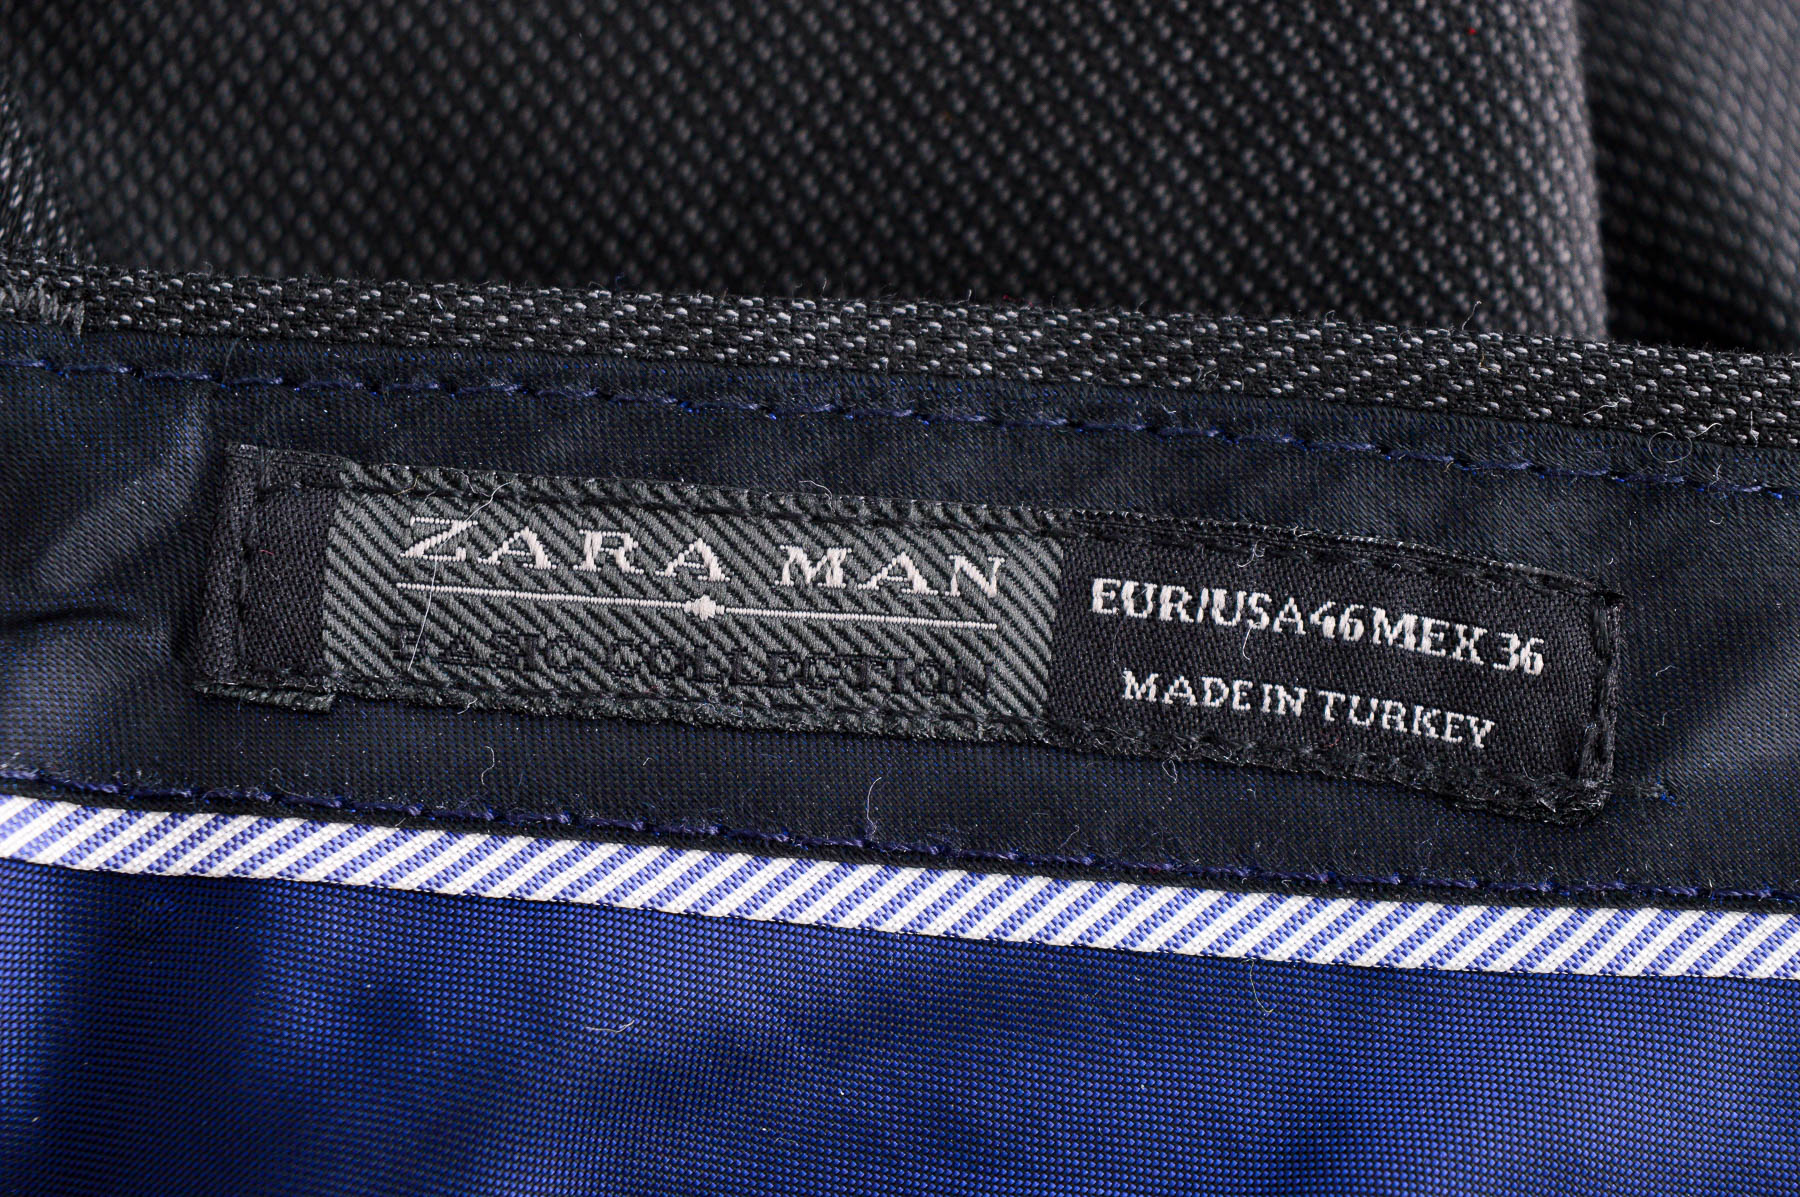 Men's trousers - ZARA Man - 2